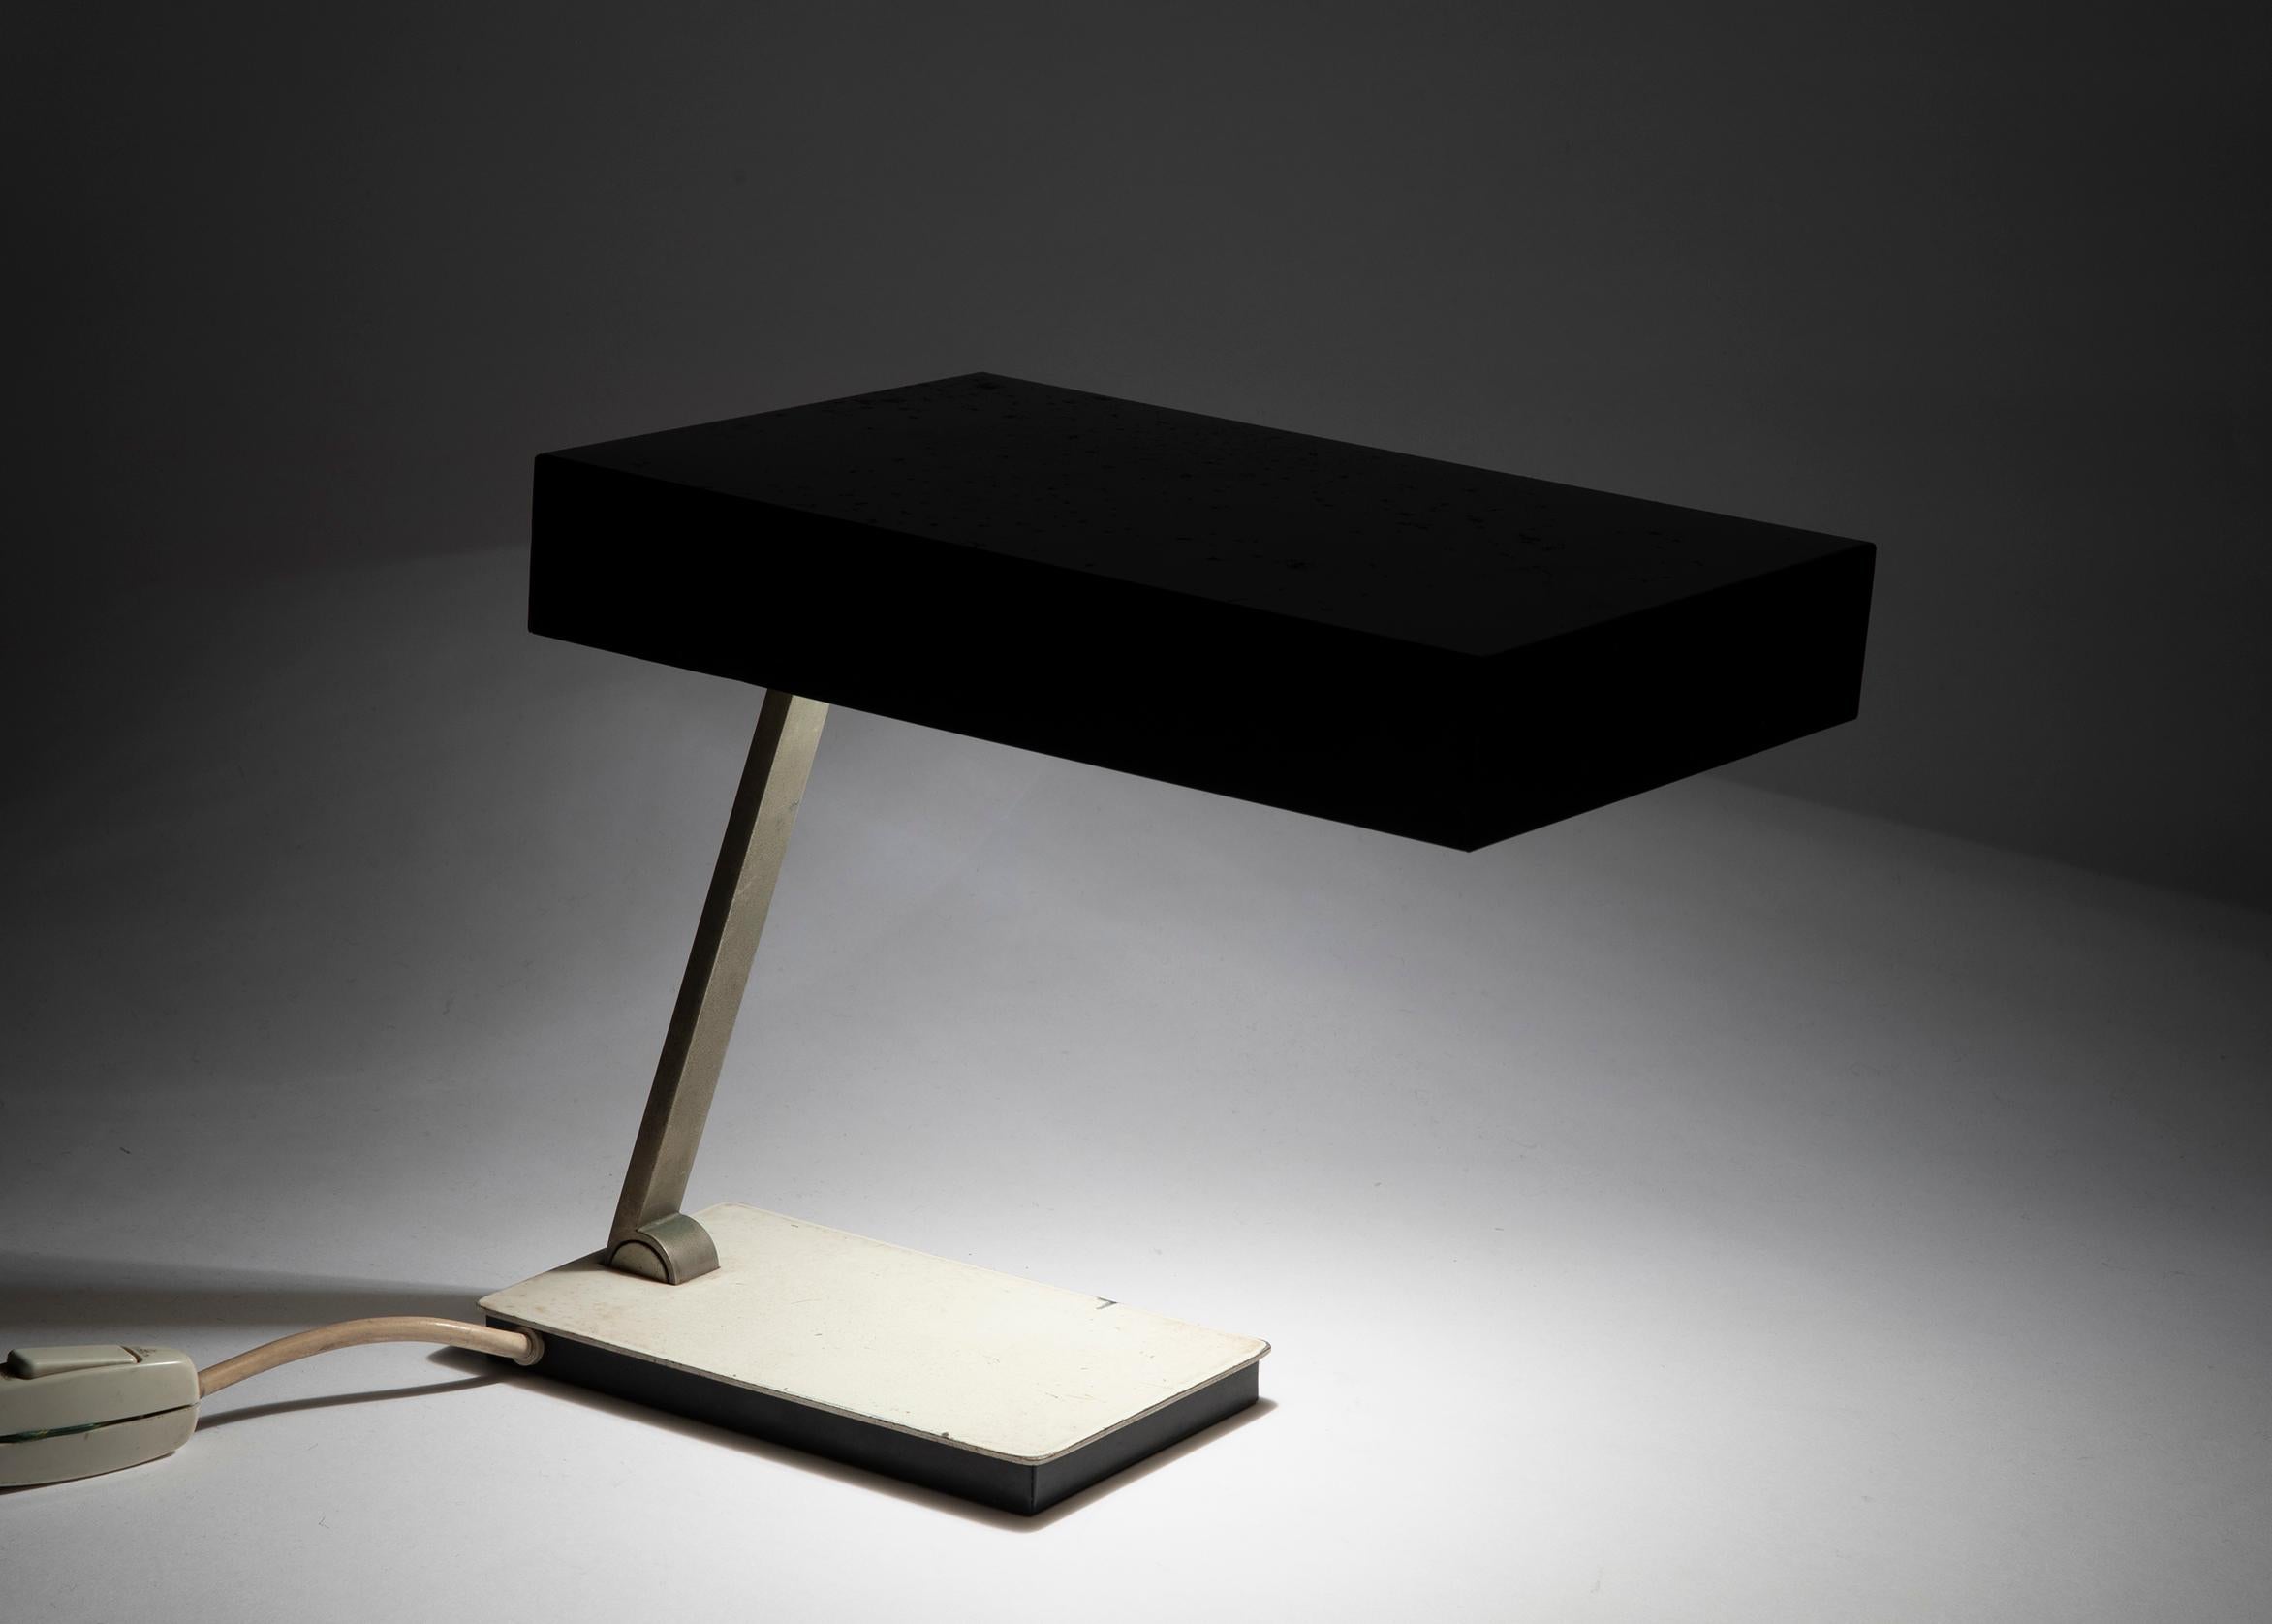 Lampe de table, modèle 6878, conçue par Klaus Hempel pour Kaiser Leuchten dans les années 60. Il cappello è basculante e regolabile grazie al giunto mobile del fusto che lo sorregge. En métal laccato nei toni del Nero e del bianco crema, richiama le